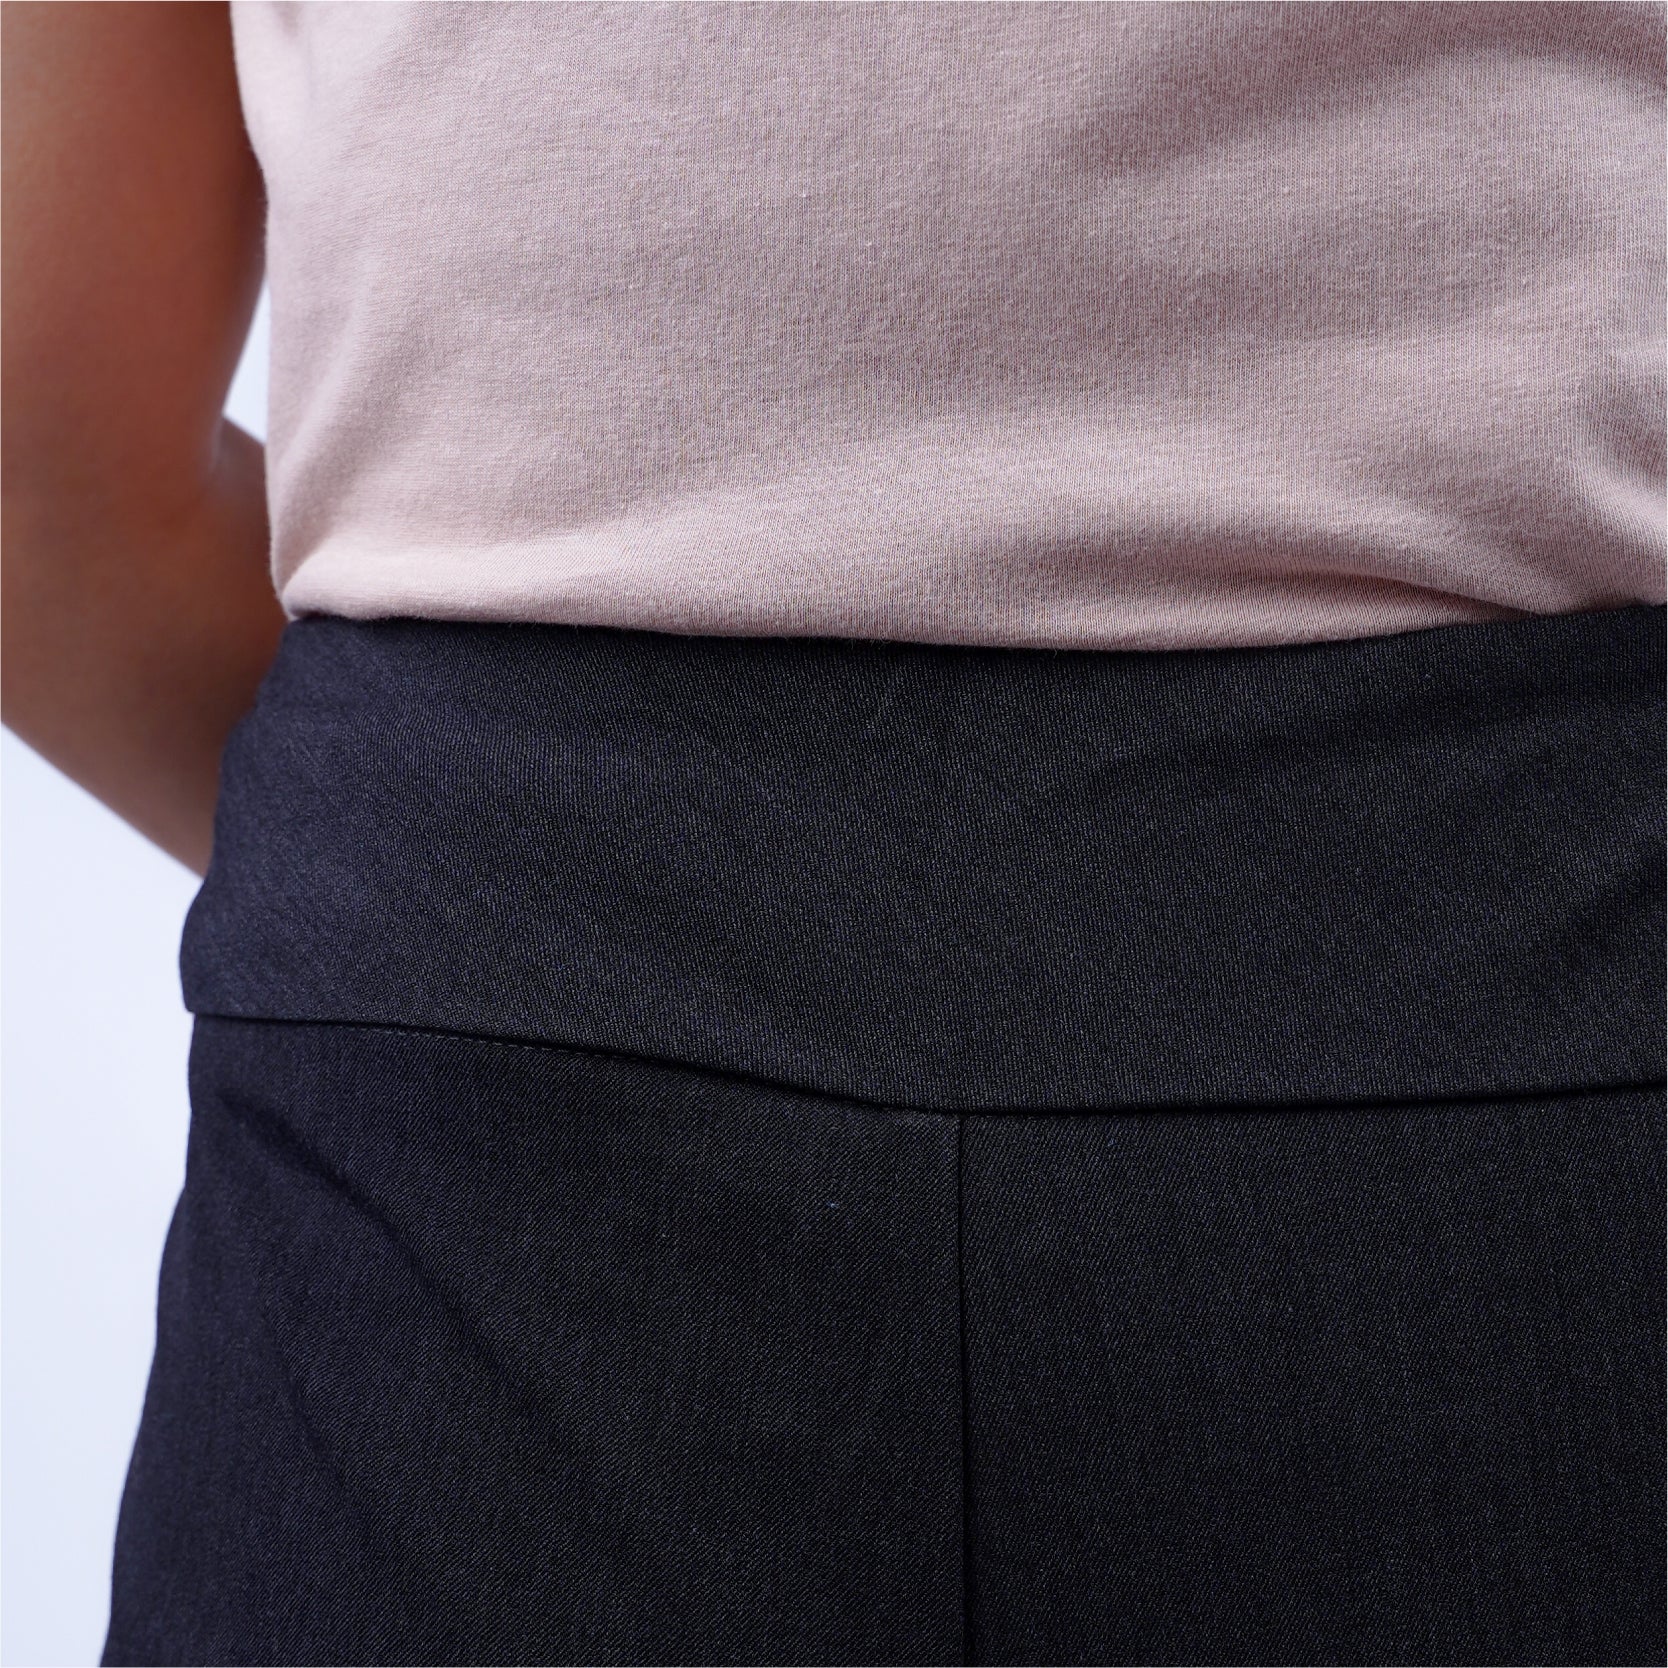 Celana Bahan Panjang Wanita Warna Banyak Warna [CG-ALD 03]